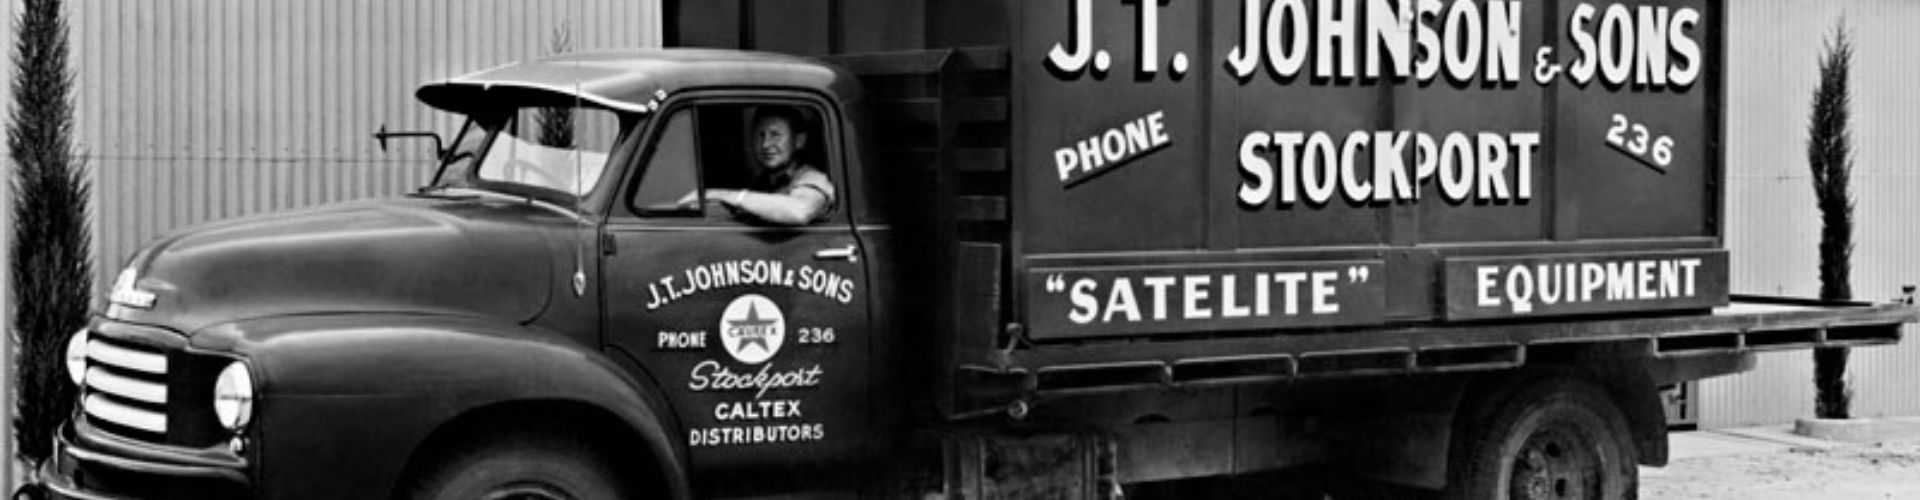 Johnsons truck with Stockport signage in Kapunda South Australia